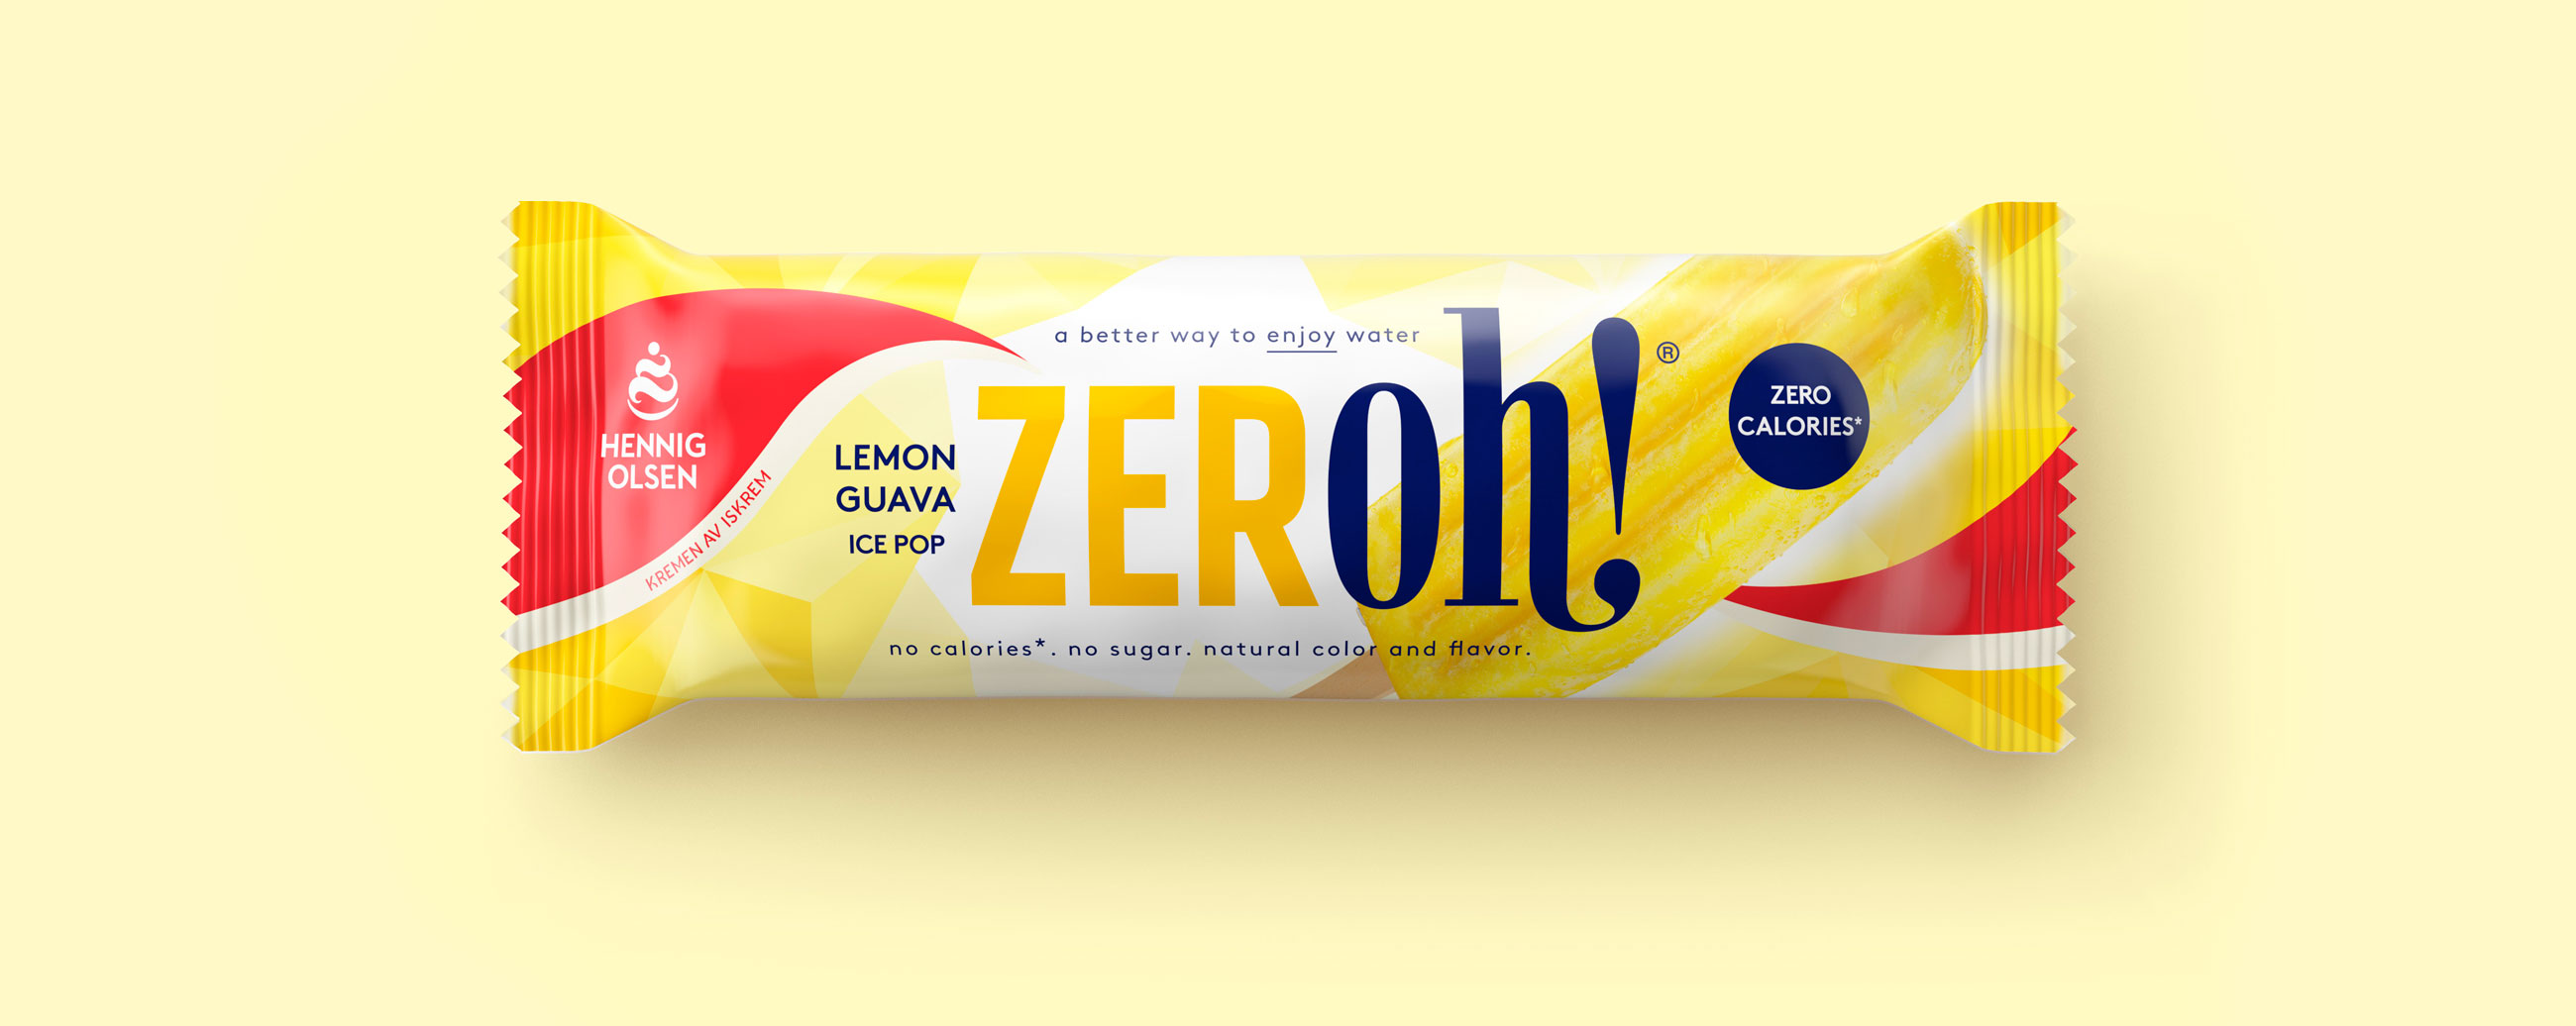 Henning Olsen is zeroh, lemon guava, ice pop. Emballasje packaging design.